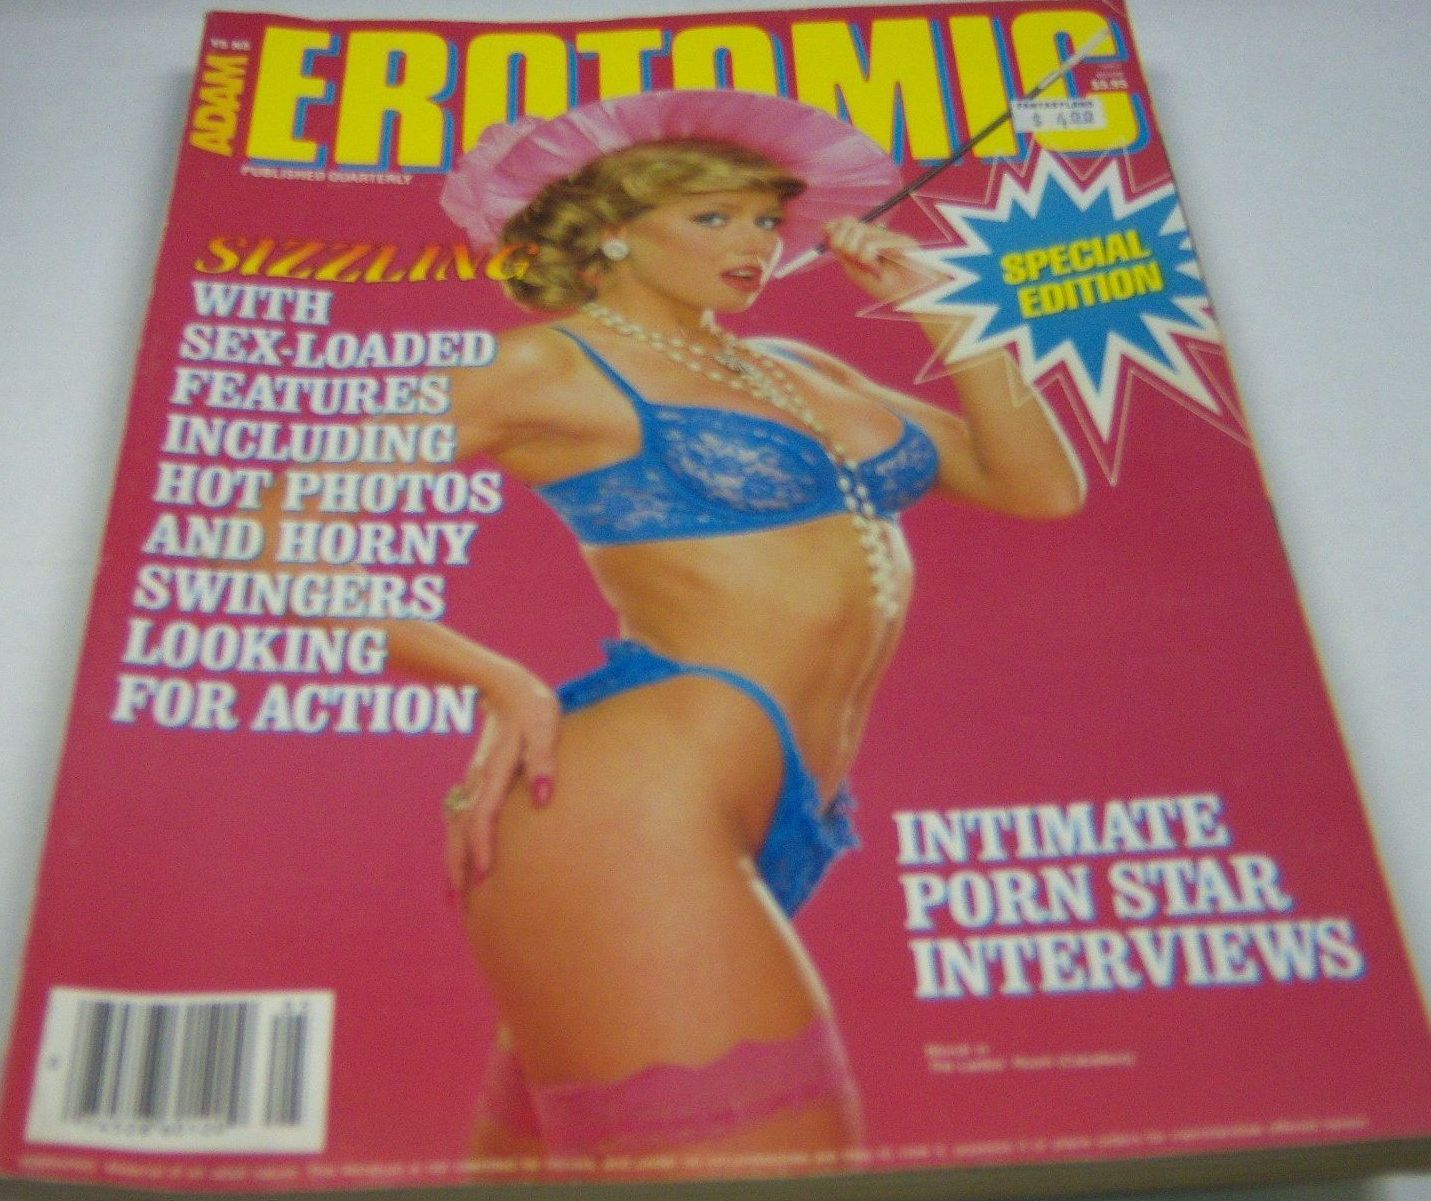 Adam Erotomic Vol. 5 # 5 magazine back issue Adam Erotomic magizine back copy 